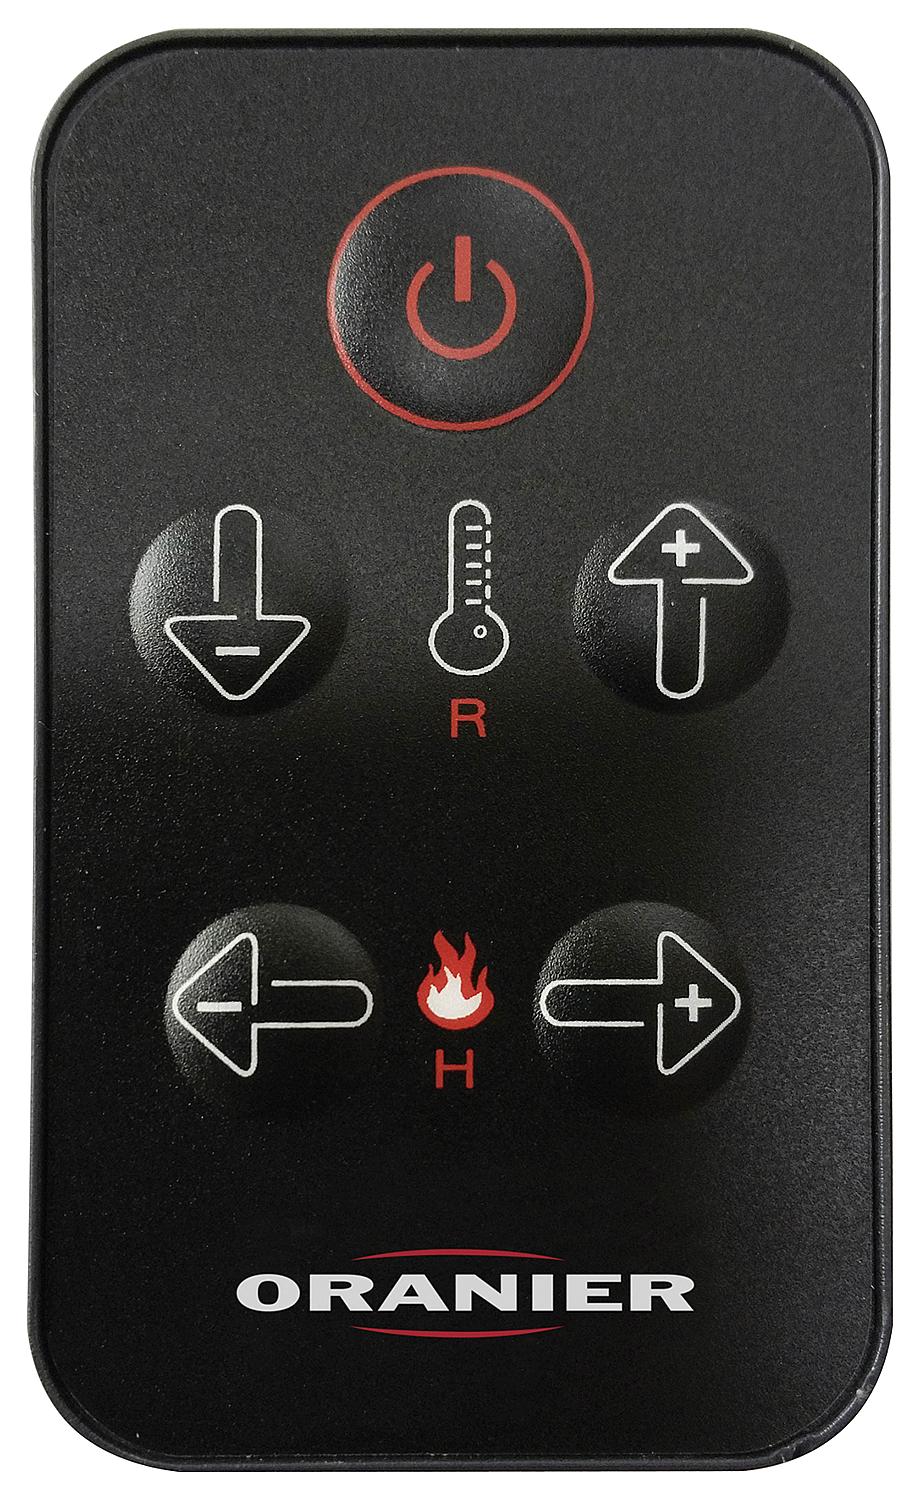 asdec life ® remote control suitable for Carus